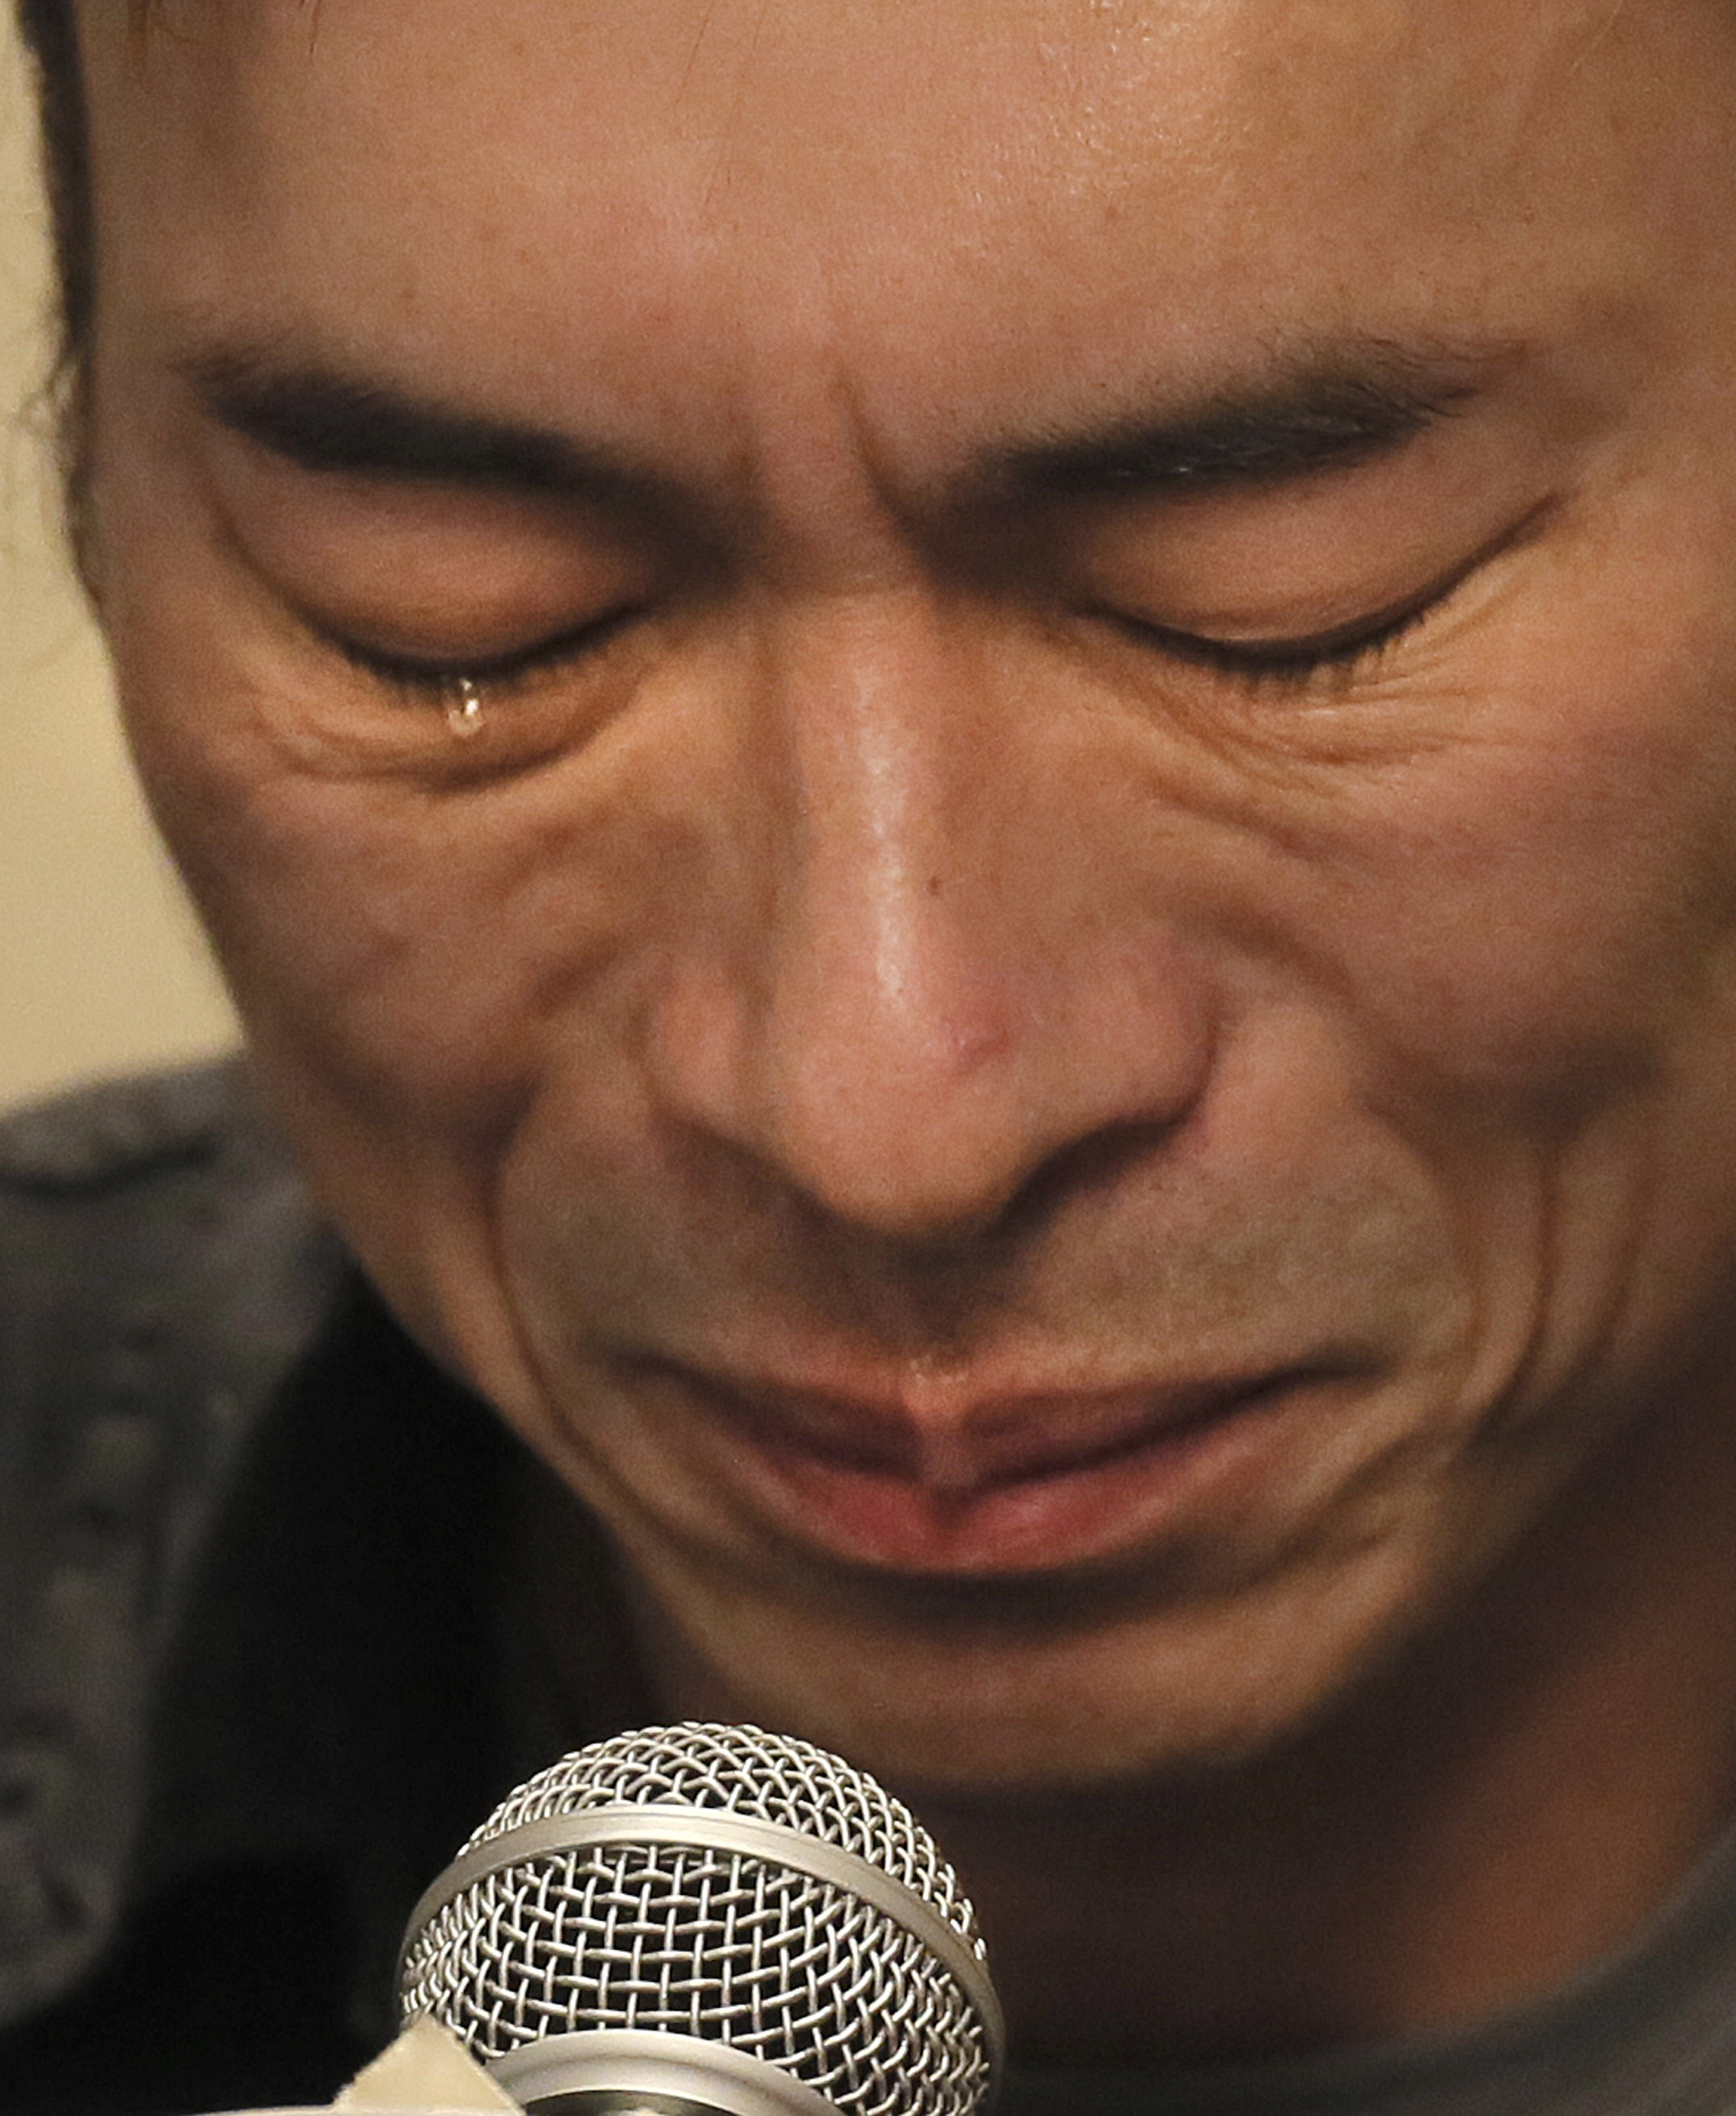 Hong Kong celeb Andy Hui apologizes after taxi camera captures infidelity